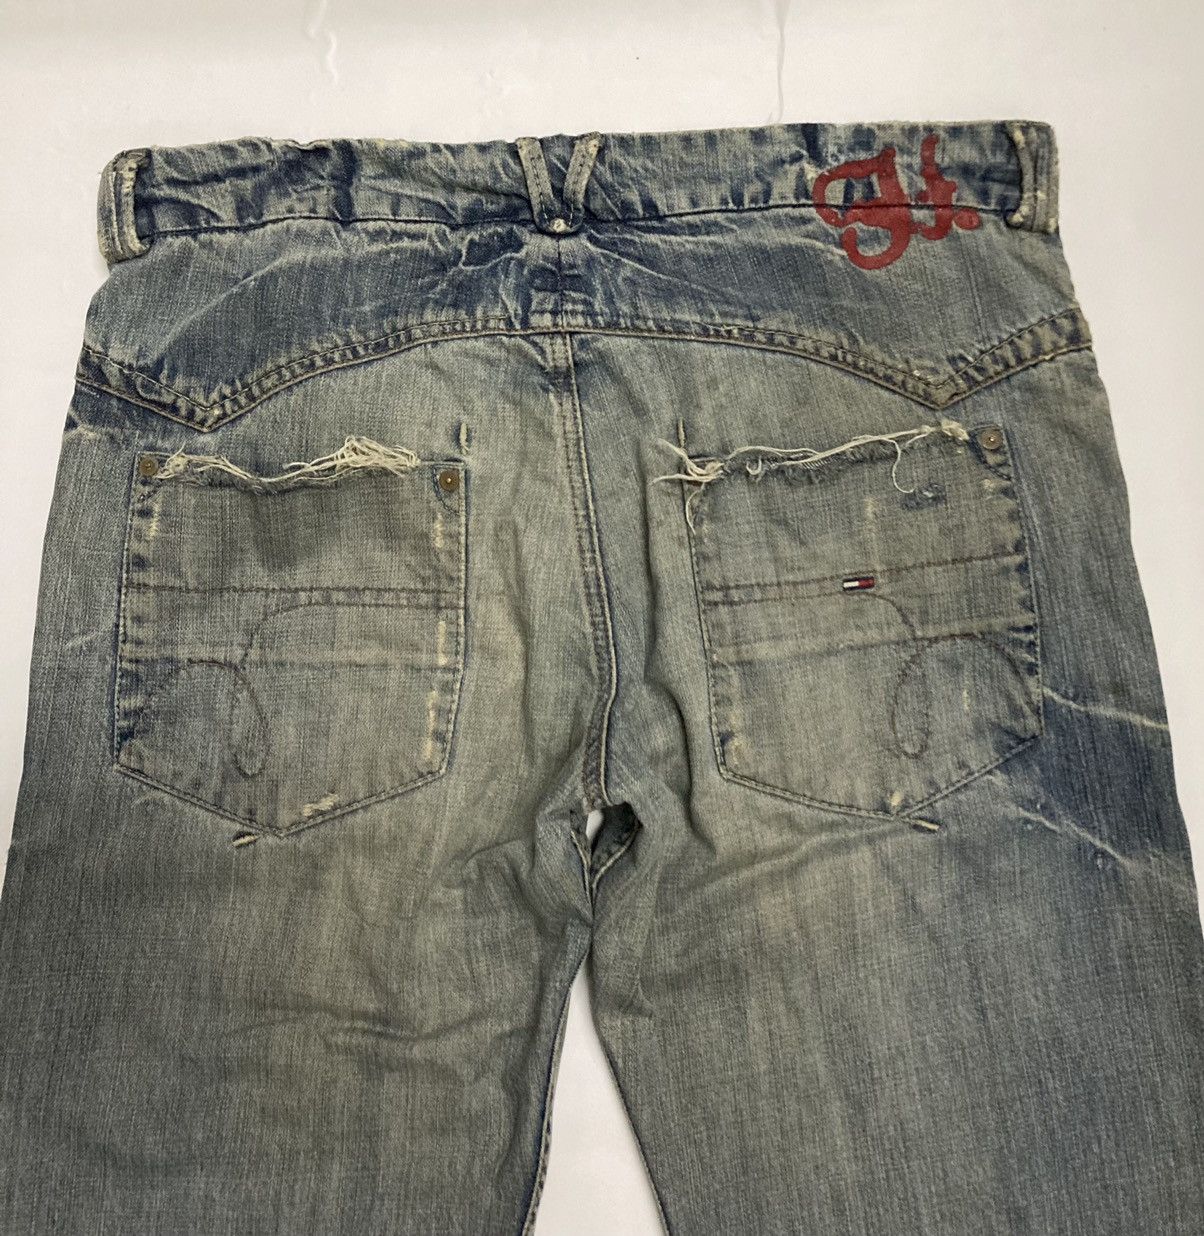 Tommy Hilfiger Denim Distressed Jeans - 10